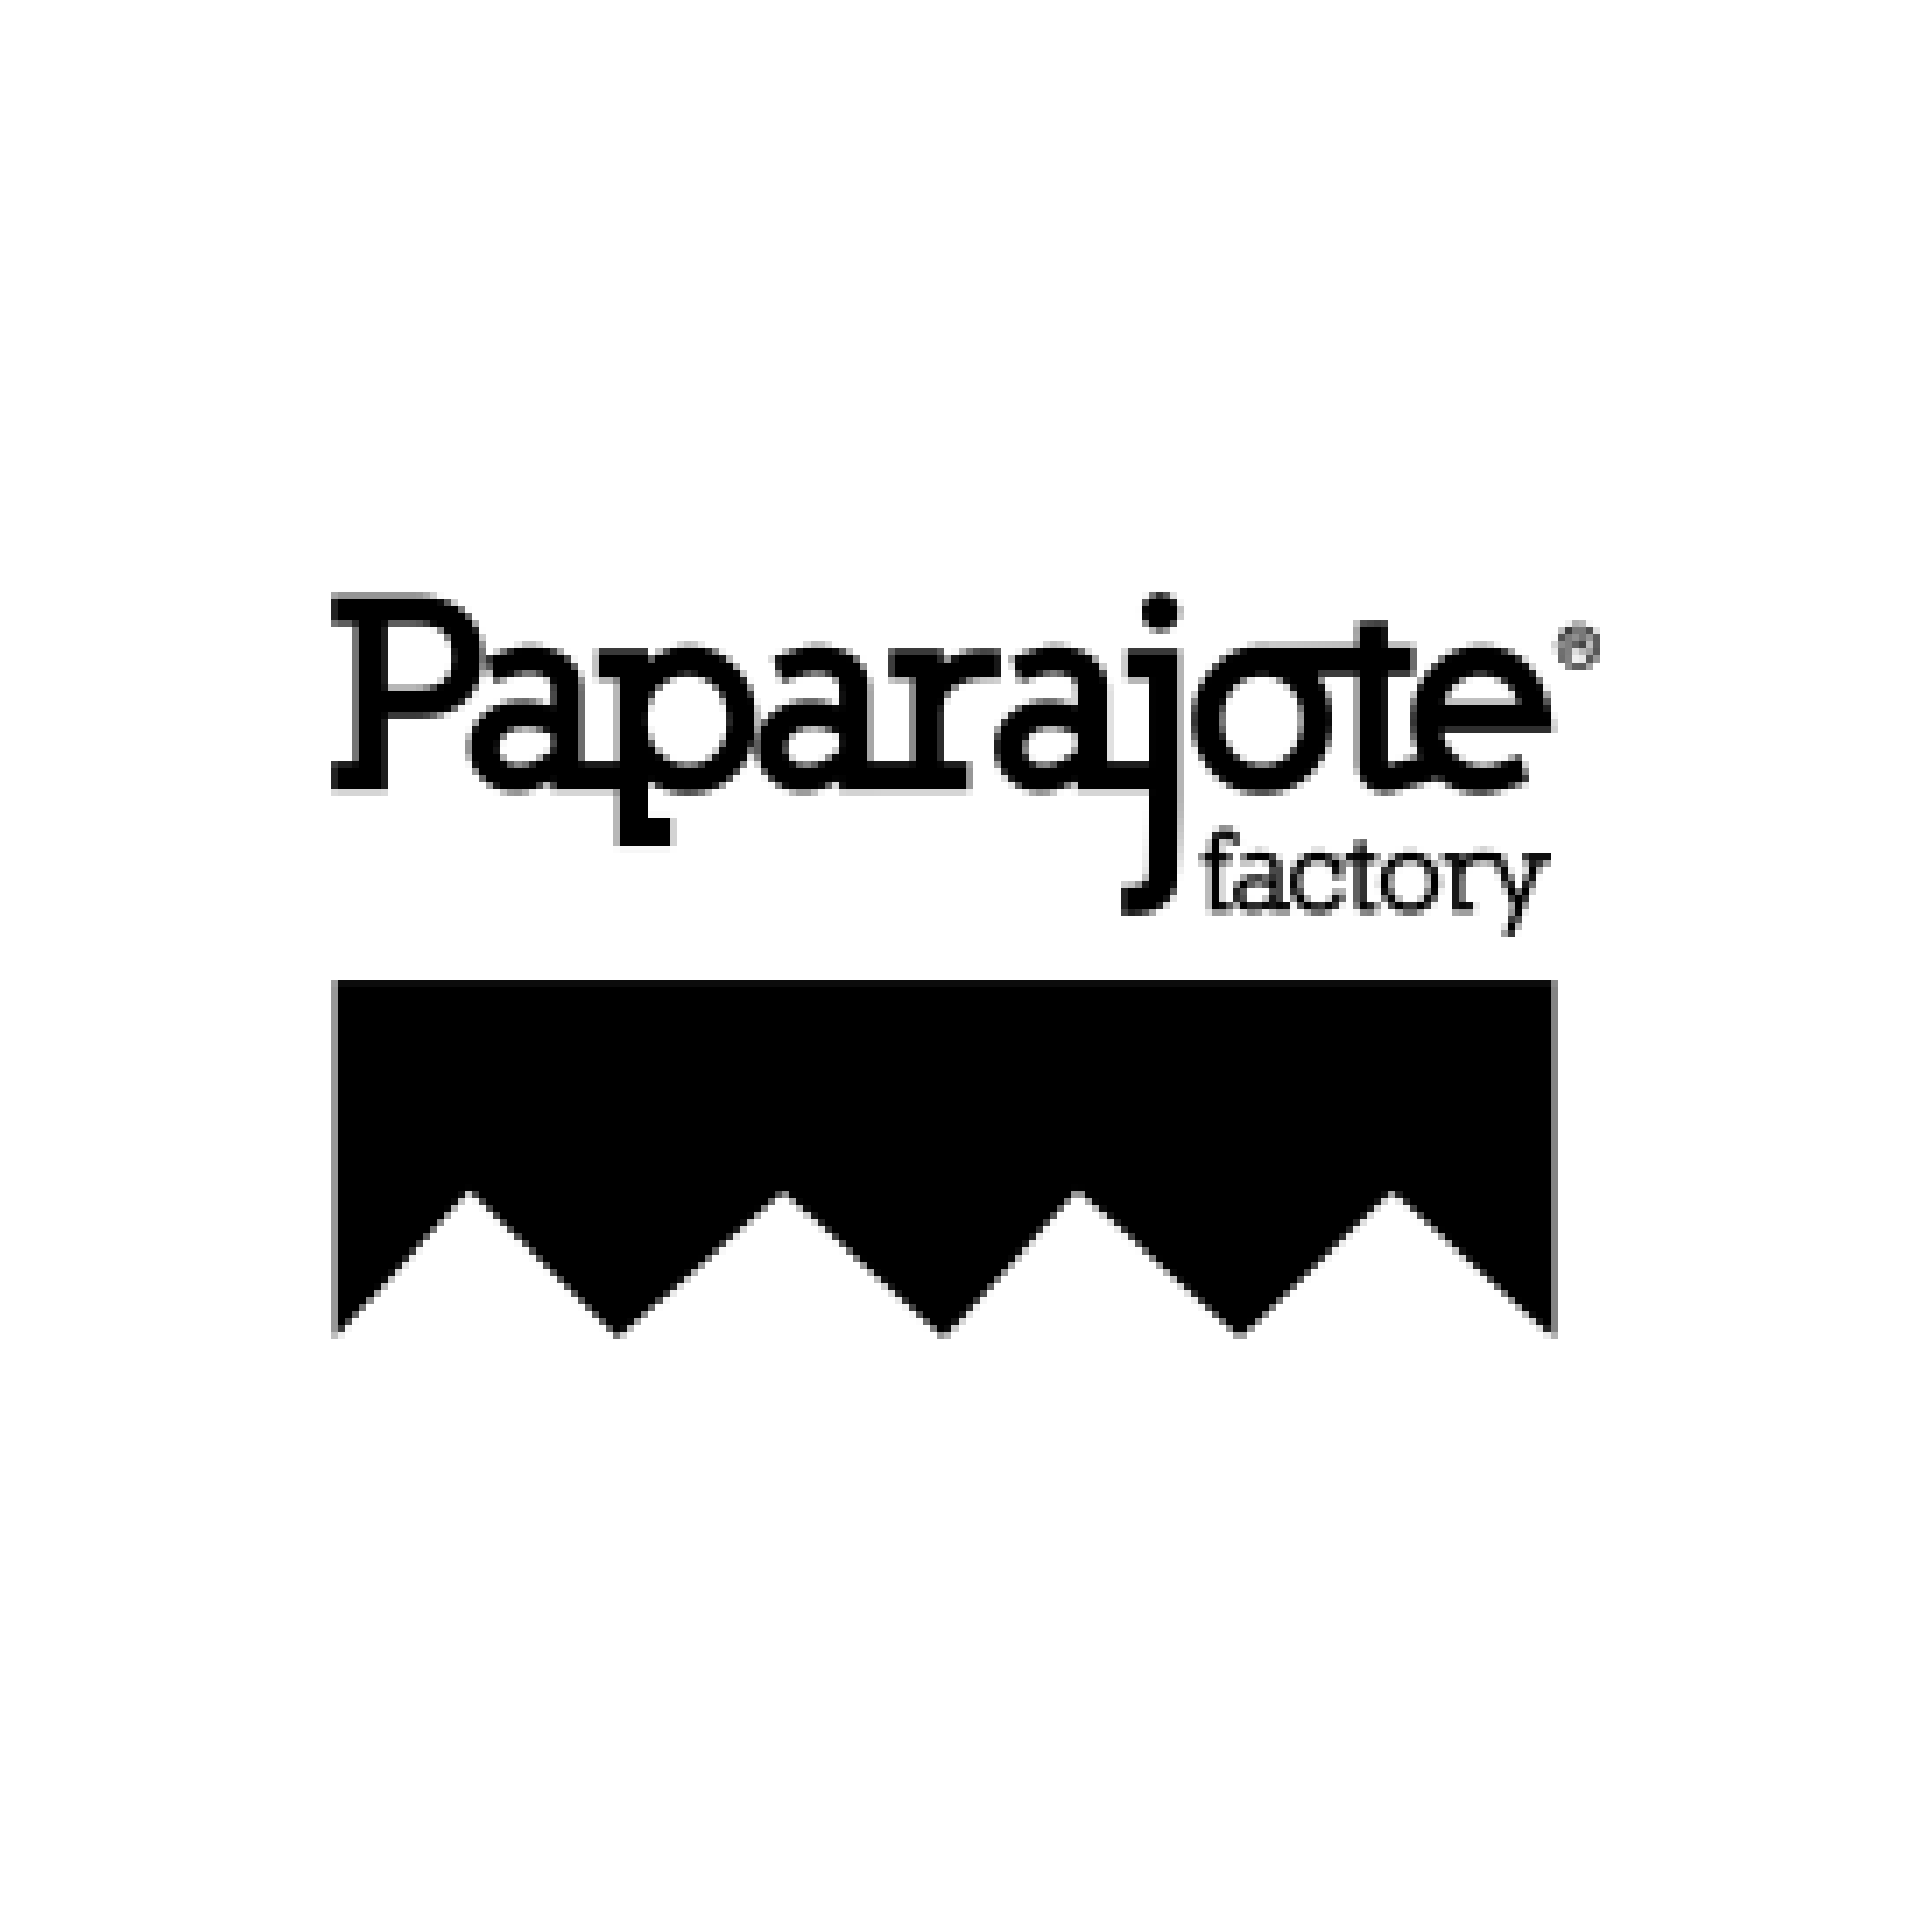 Paparajote factory logo